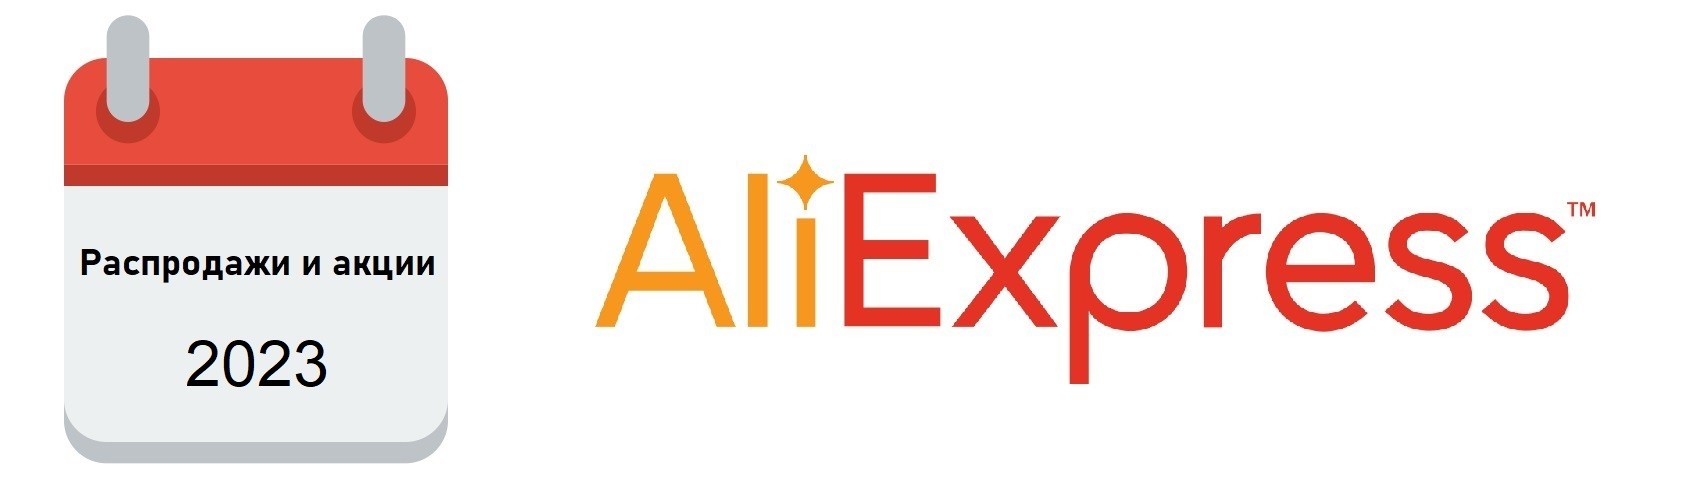 Календарь распродаж AliExpress 📅 на 2023 год